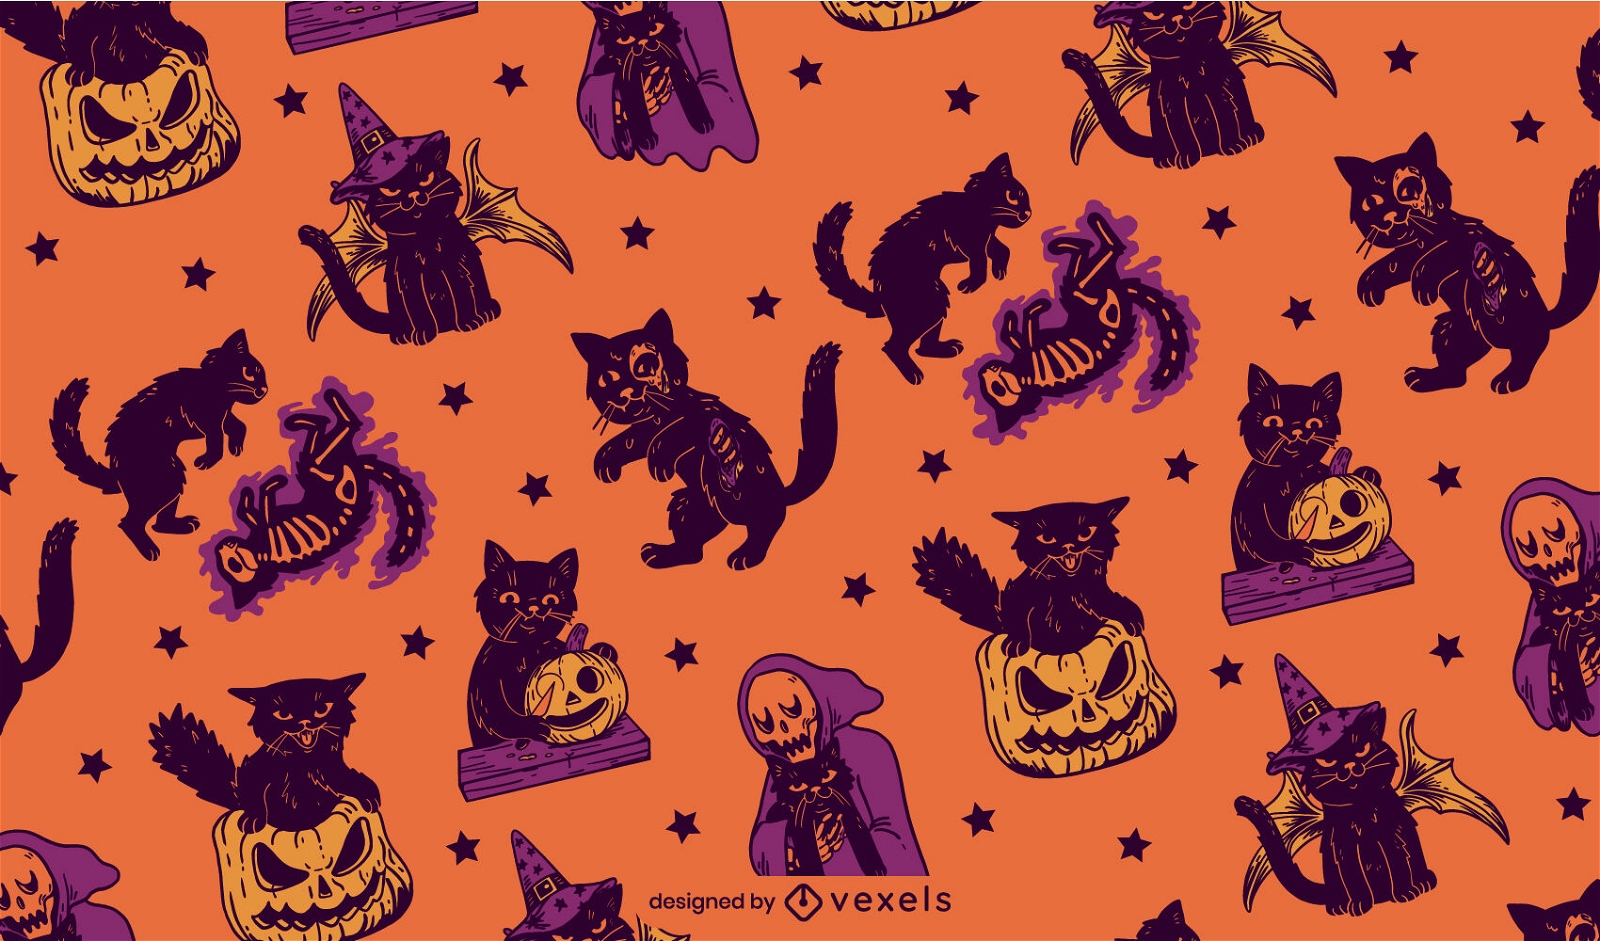 Halloween nocturnal creatures pattern design